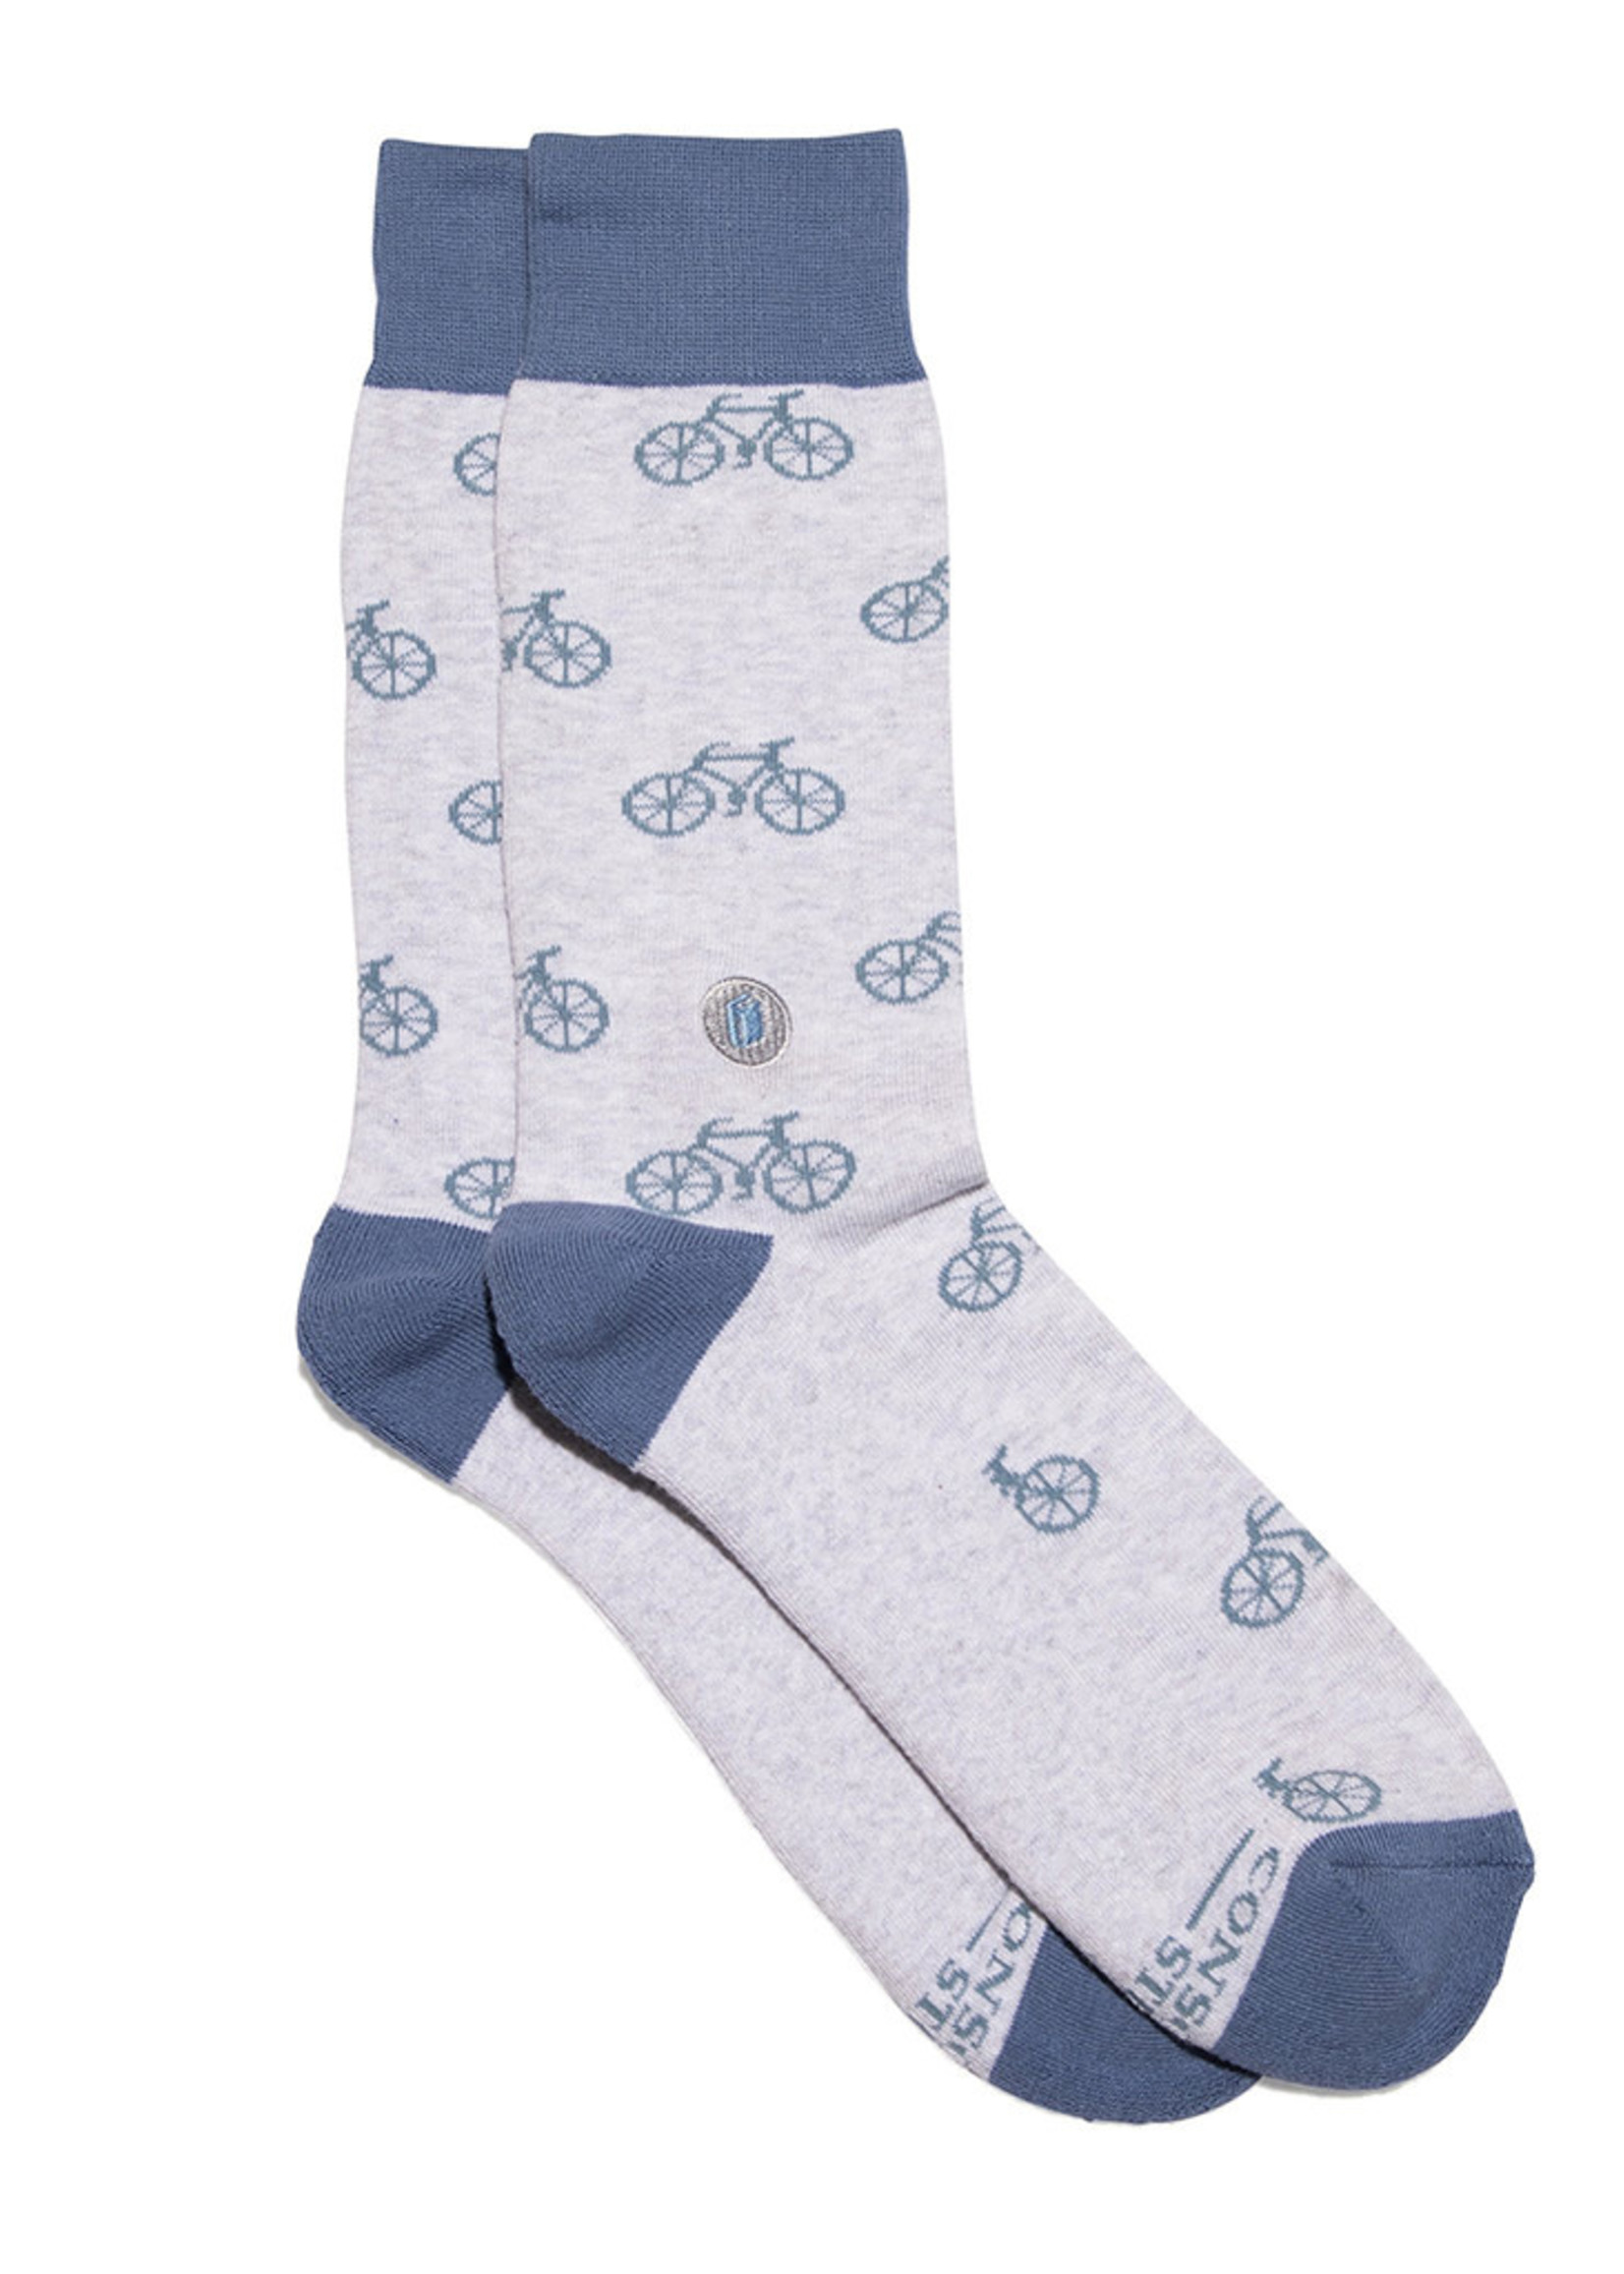 Conscious Step Men's Bike Socks